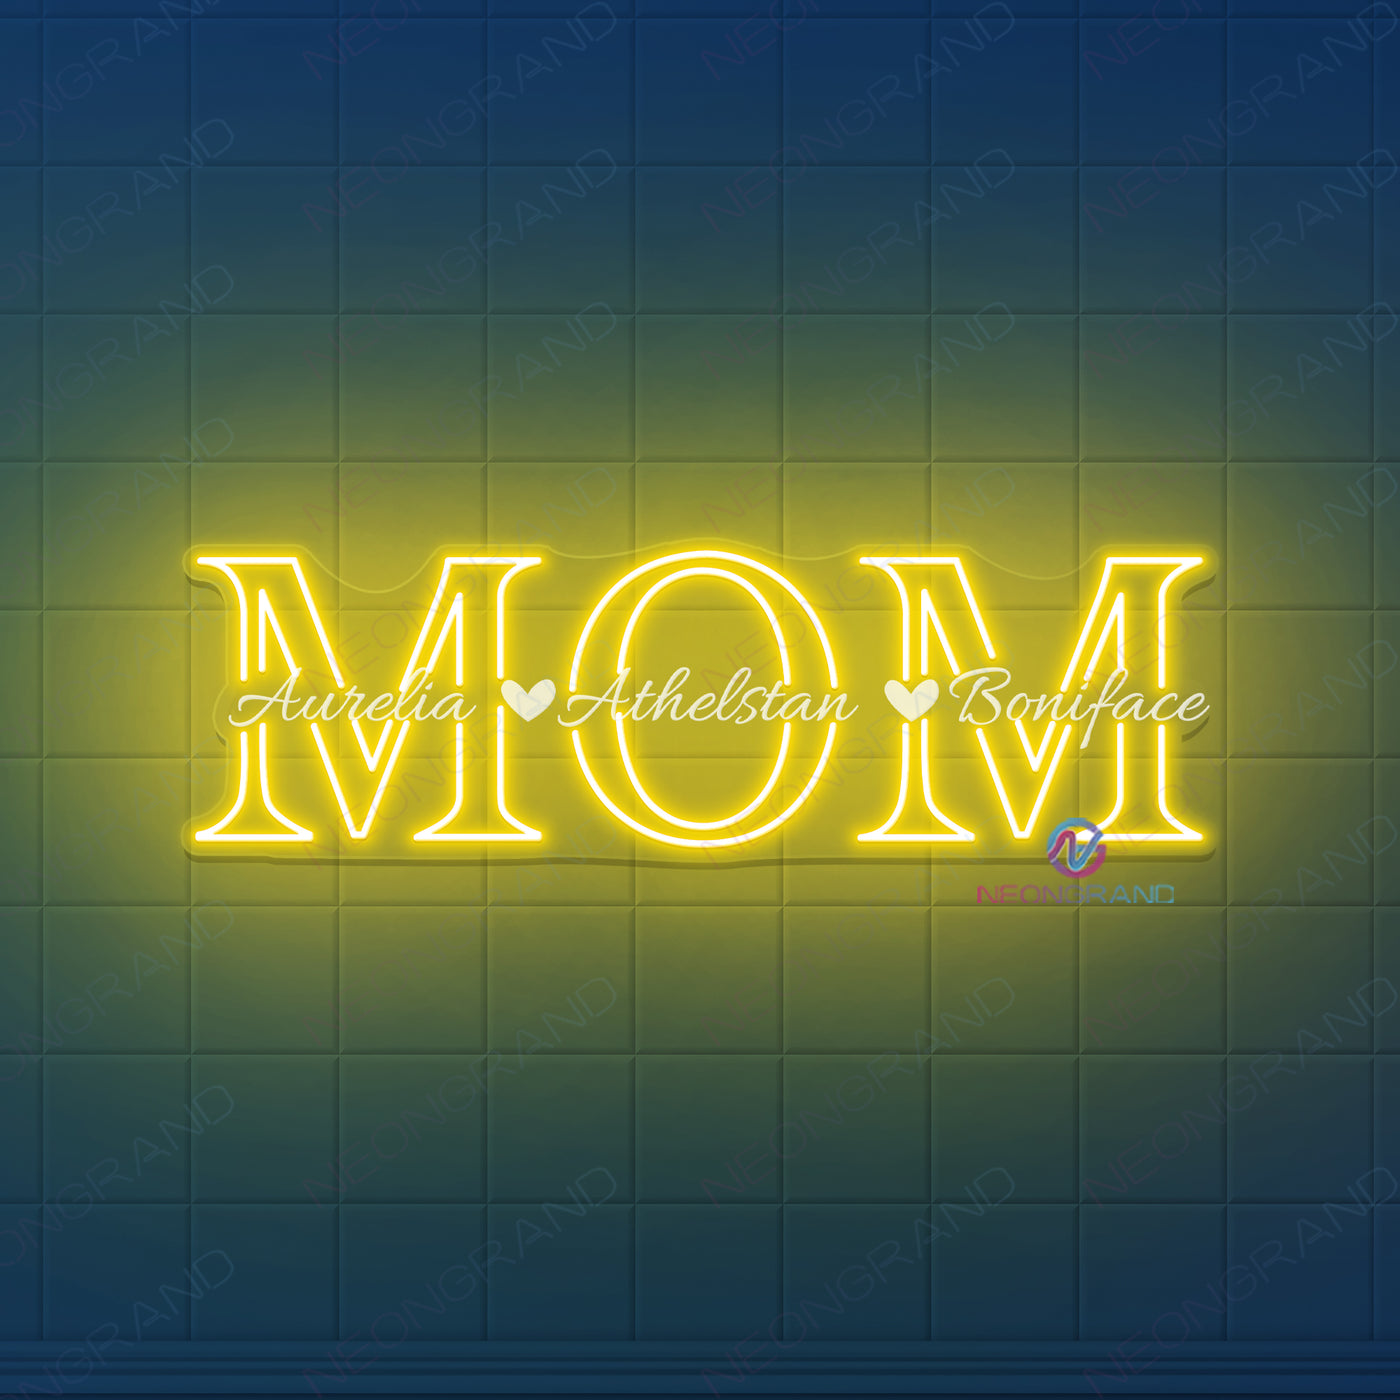 Custom Childs' Name Neon Sign Mother's Day Led Light